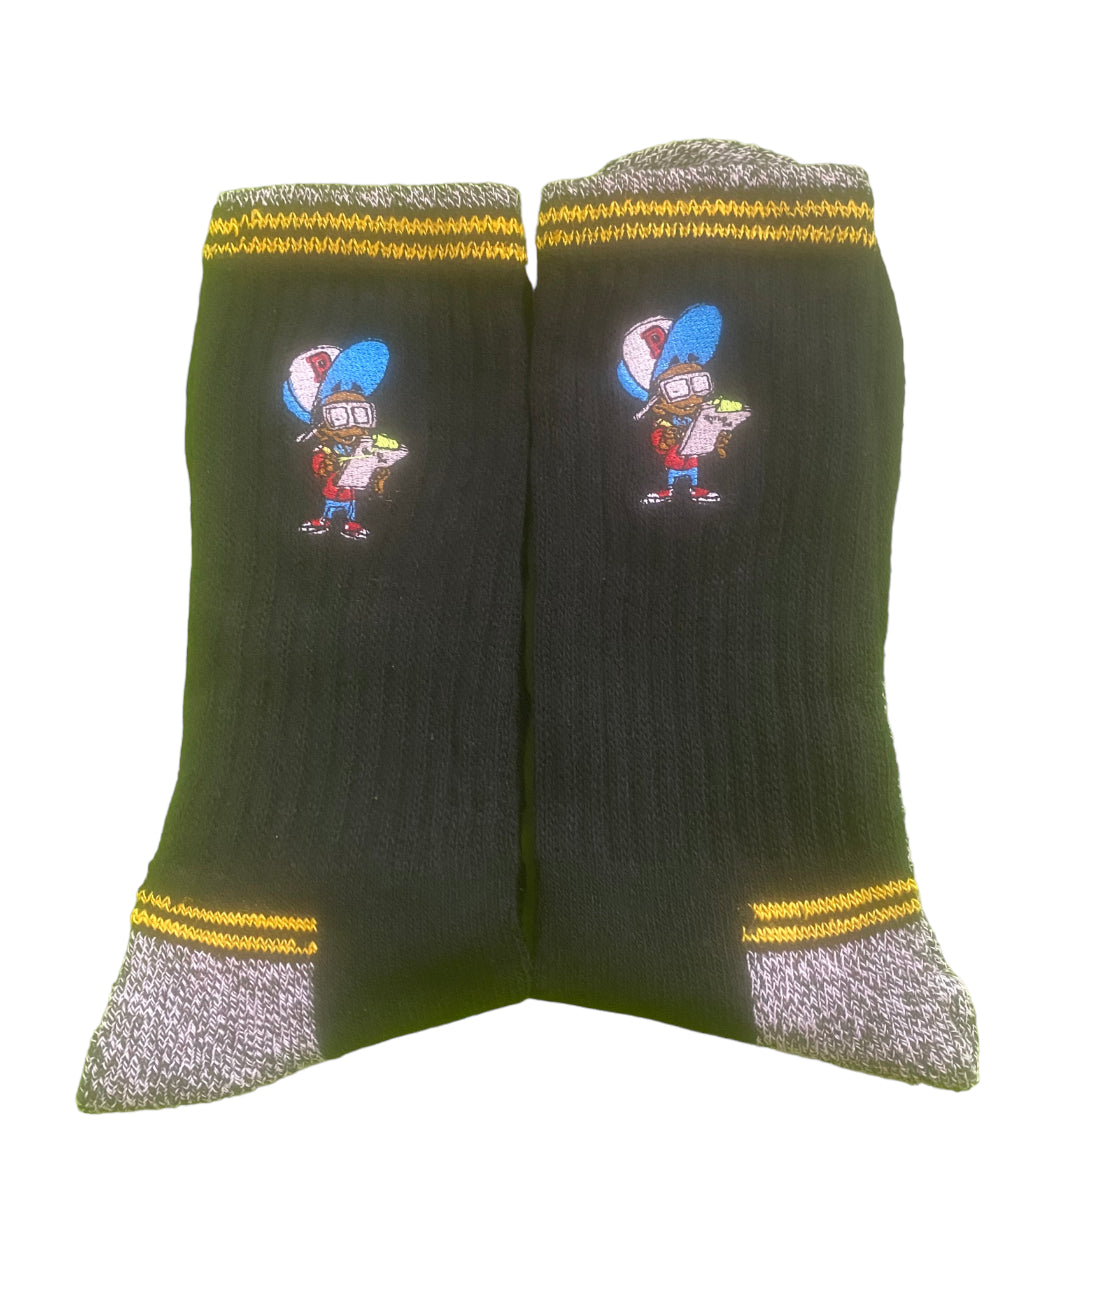 Custom socks